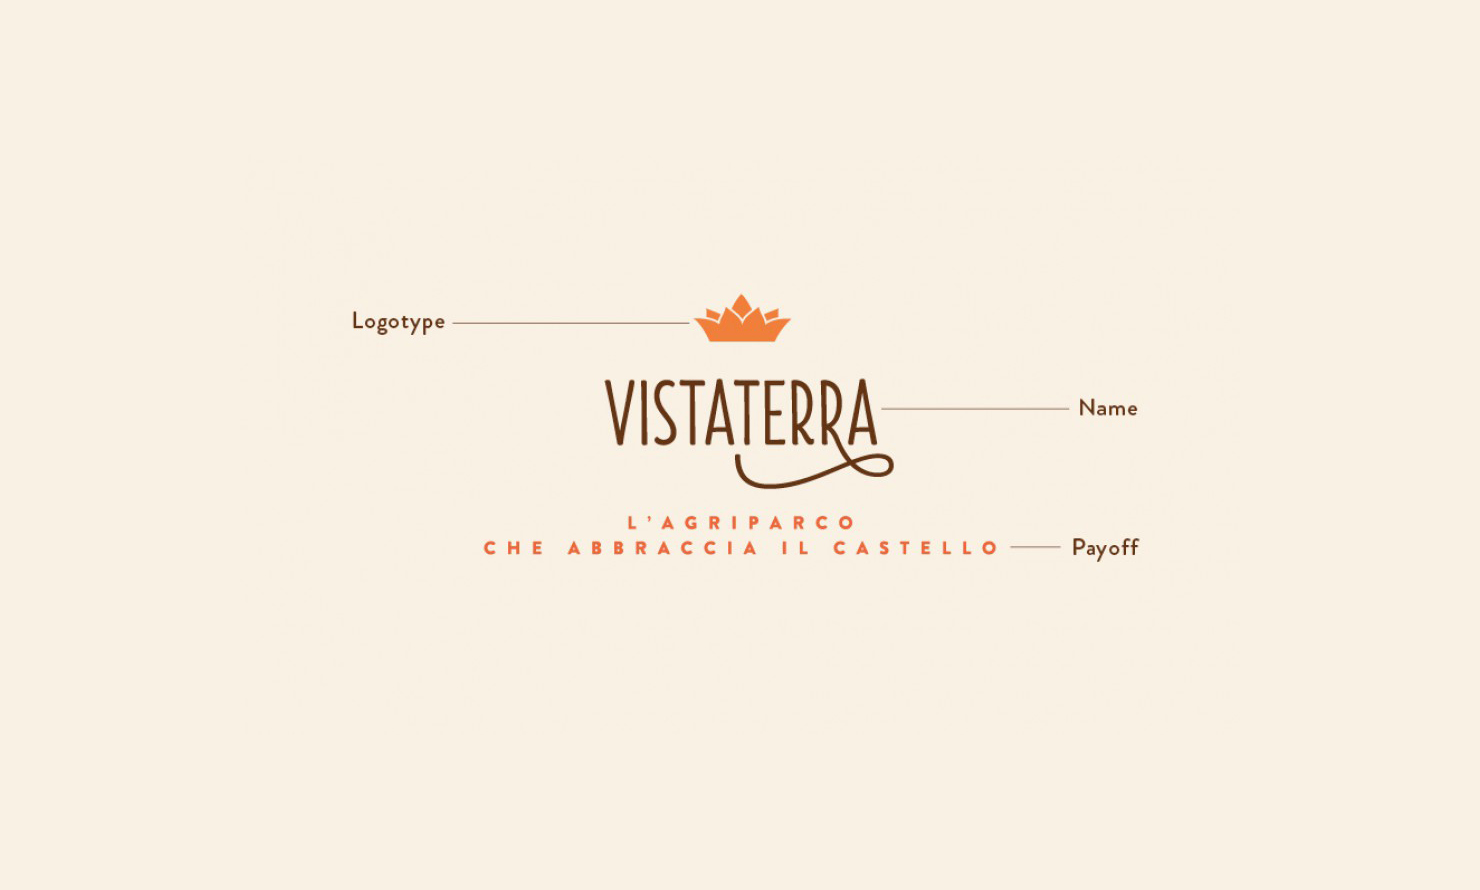 https://www.kubelibre.com/uploads/Slider-work-tutti-clienti/manital-vistaterra-l-agriparco-che-abbraccia-il-castello-brand-identity-brand-strategy-9.jpg